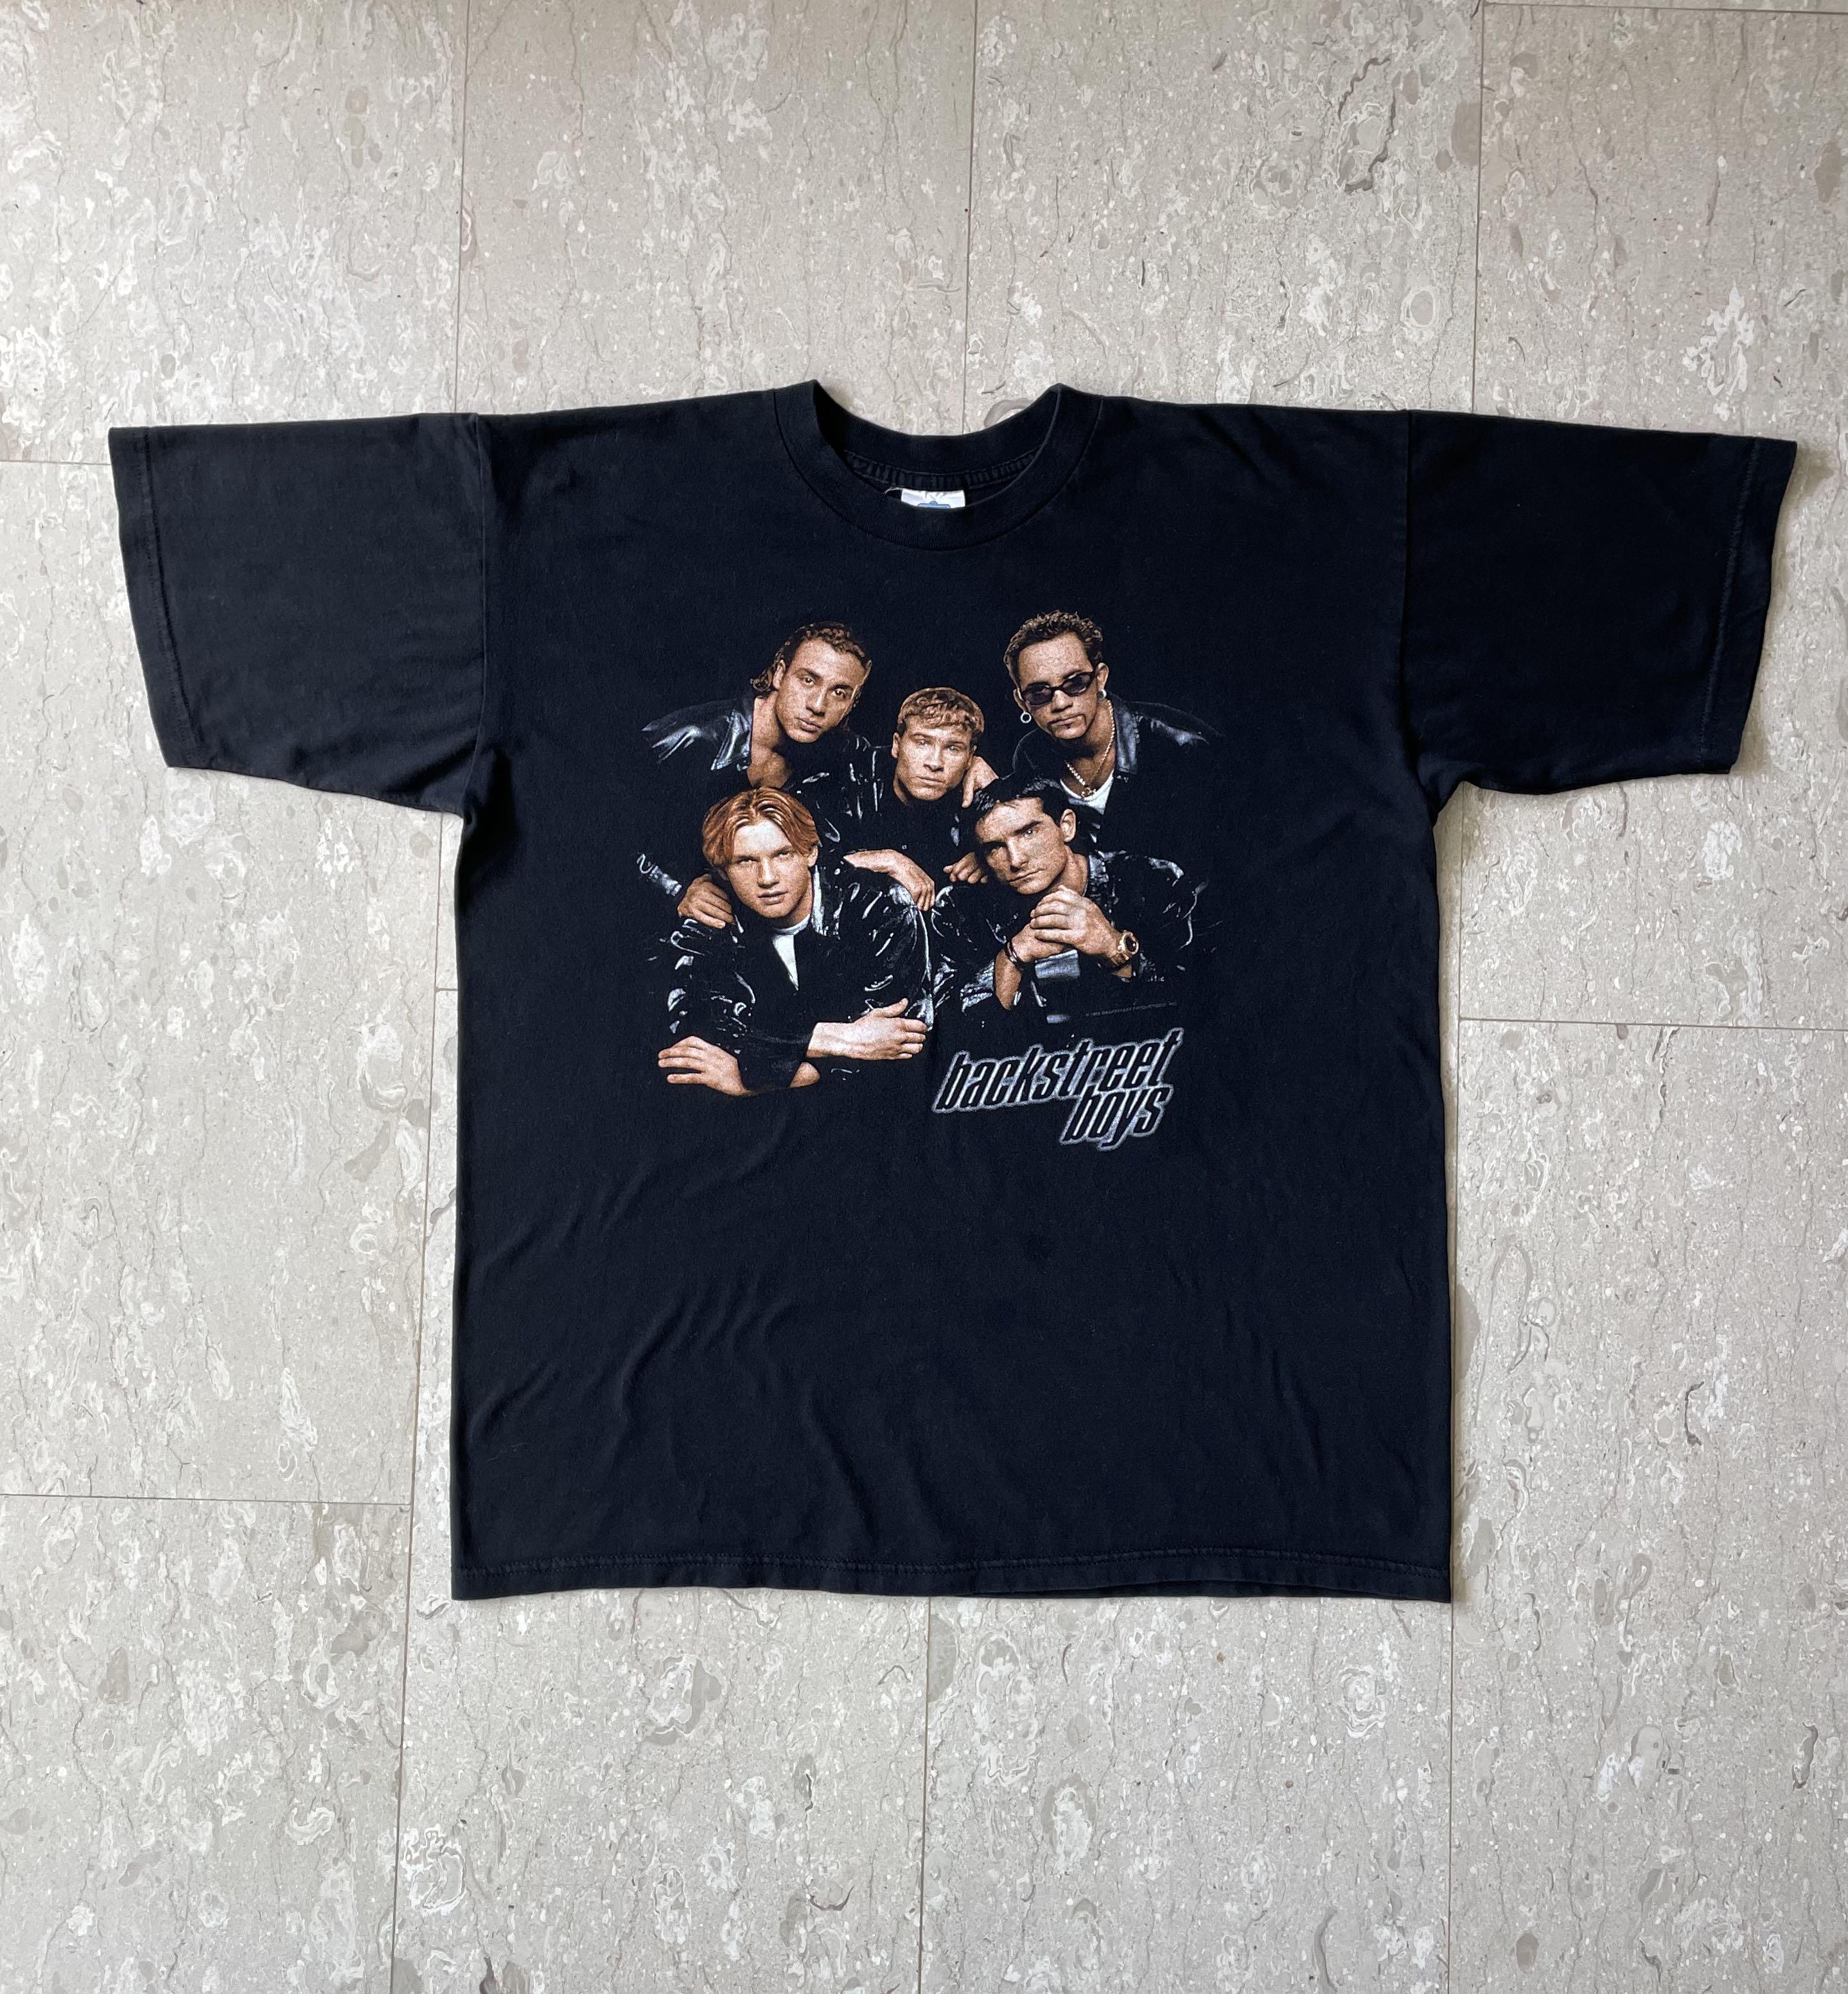 Backstreet Boys vintage tee 1998 - Tシャツ/カットソー(半袖/袖なし)